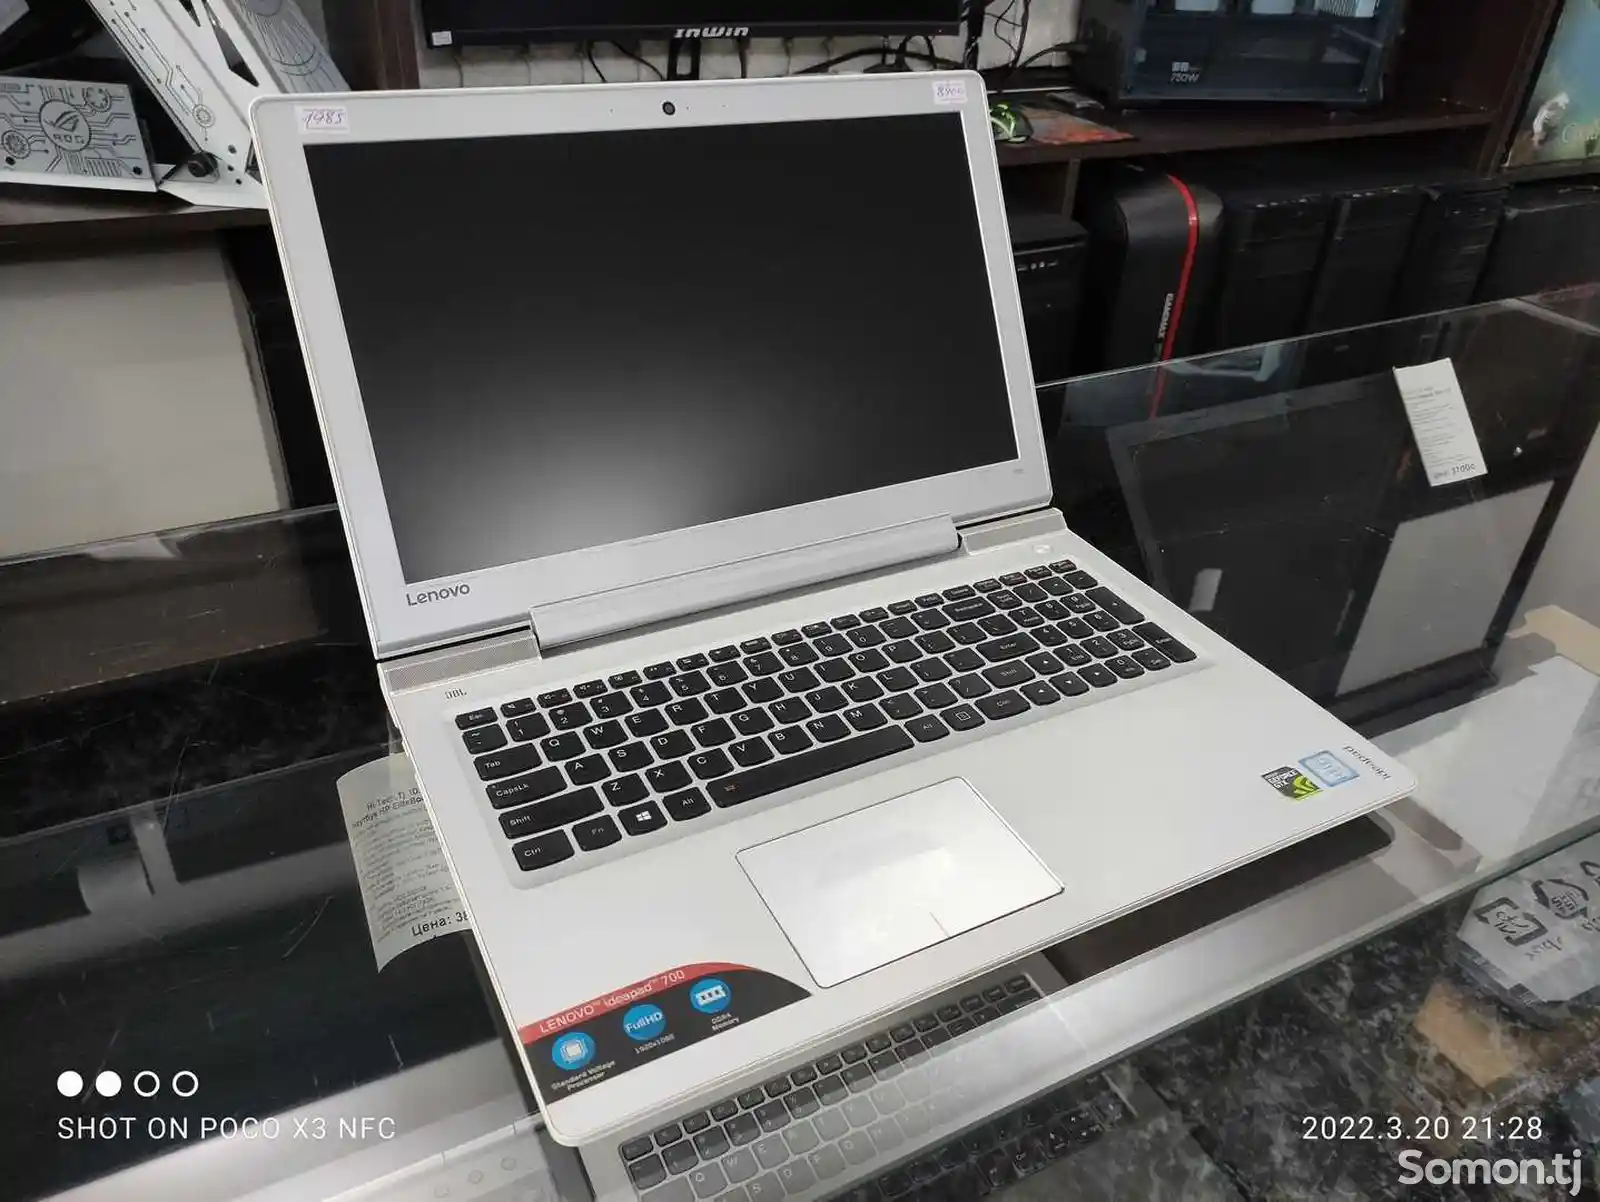 Игровой Ноутбук Lenovo Ideapad 700 Core i7-6700HQ GTX 950M 2GB-1